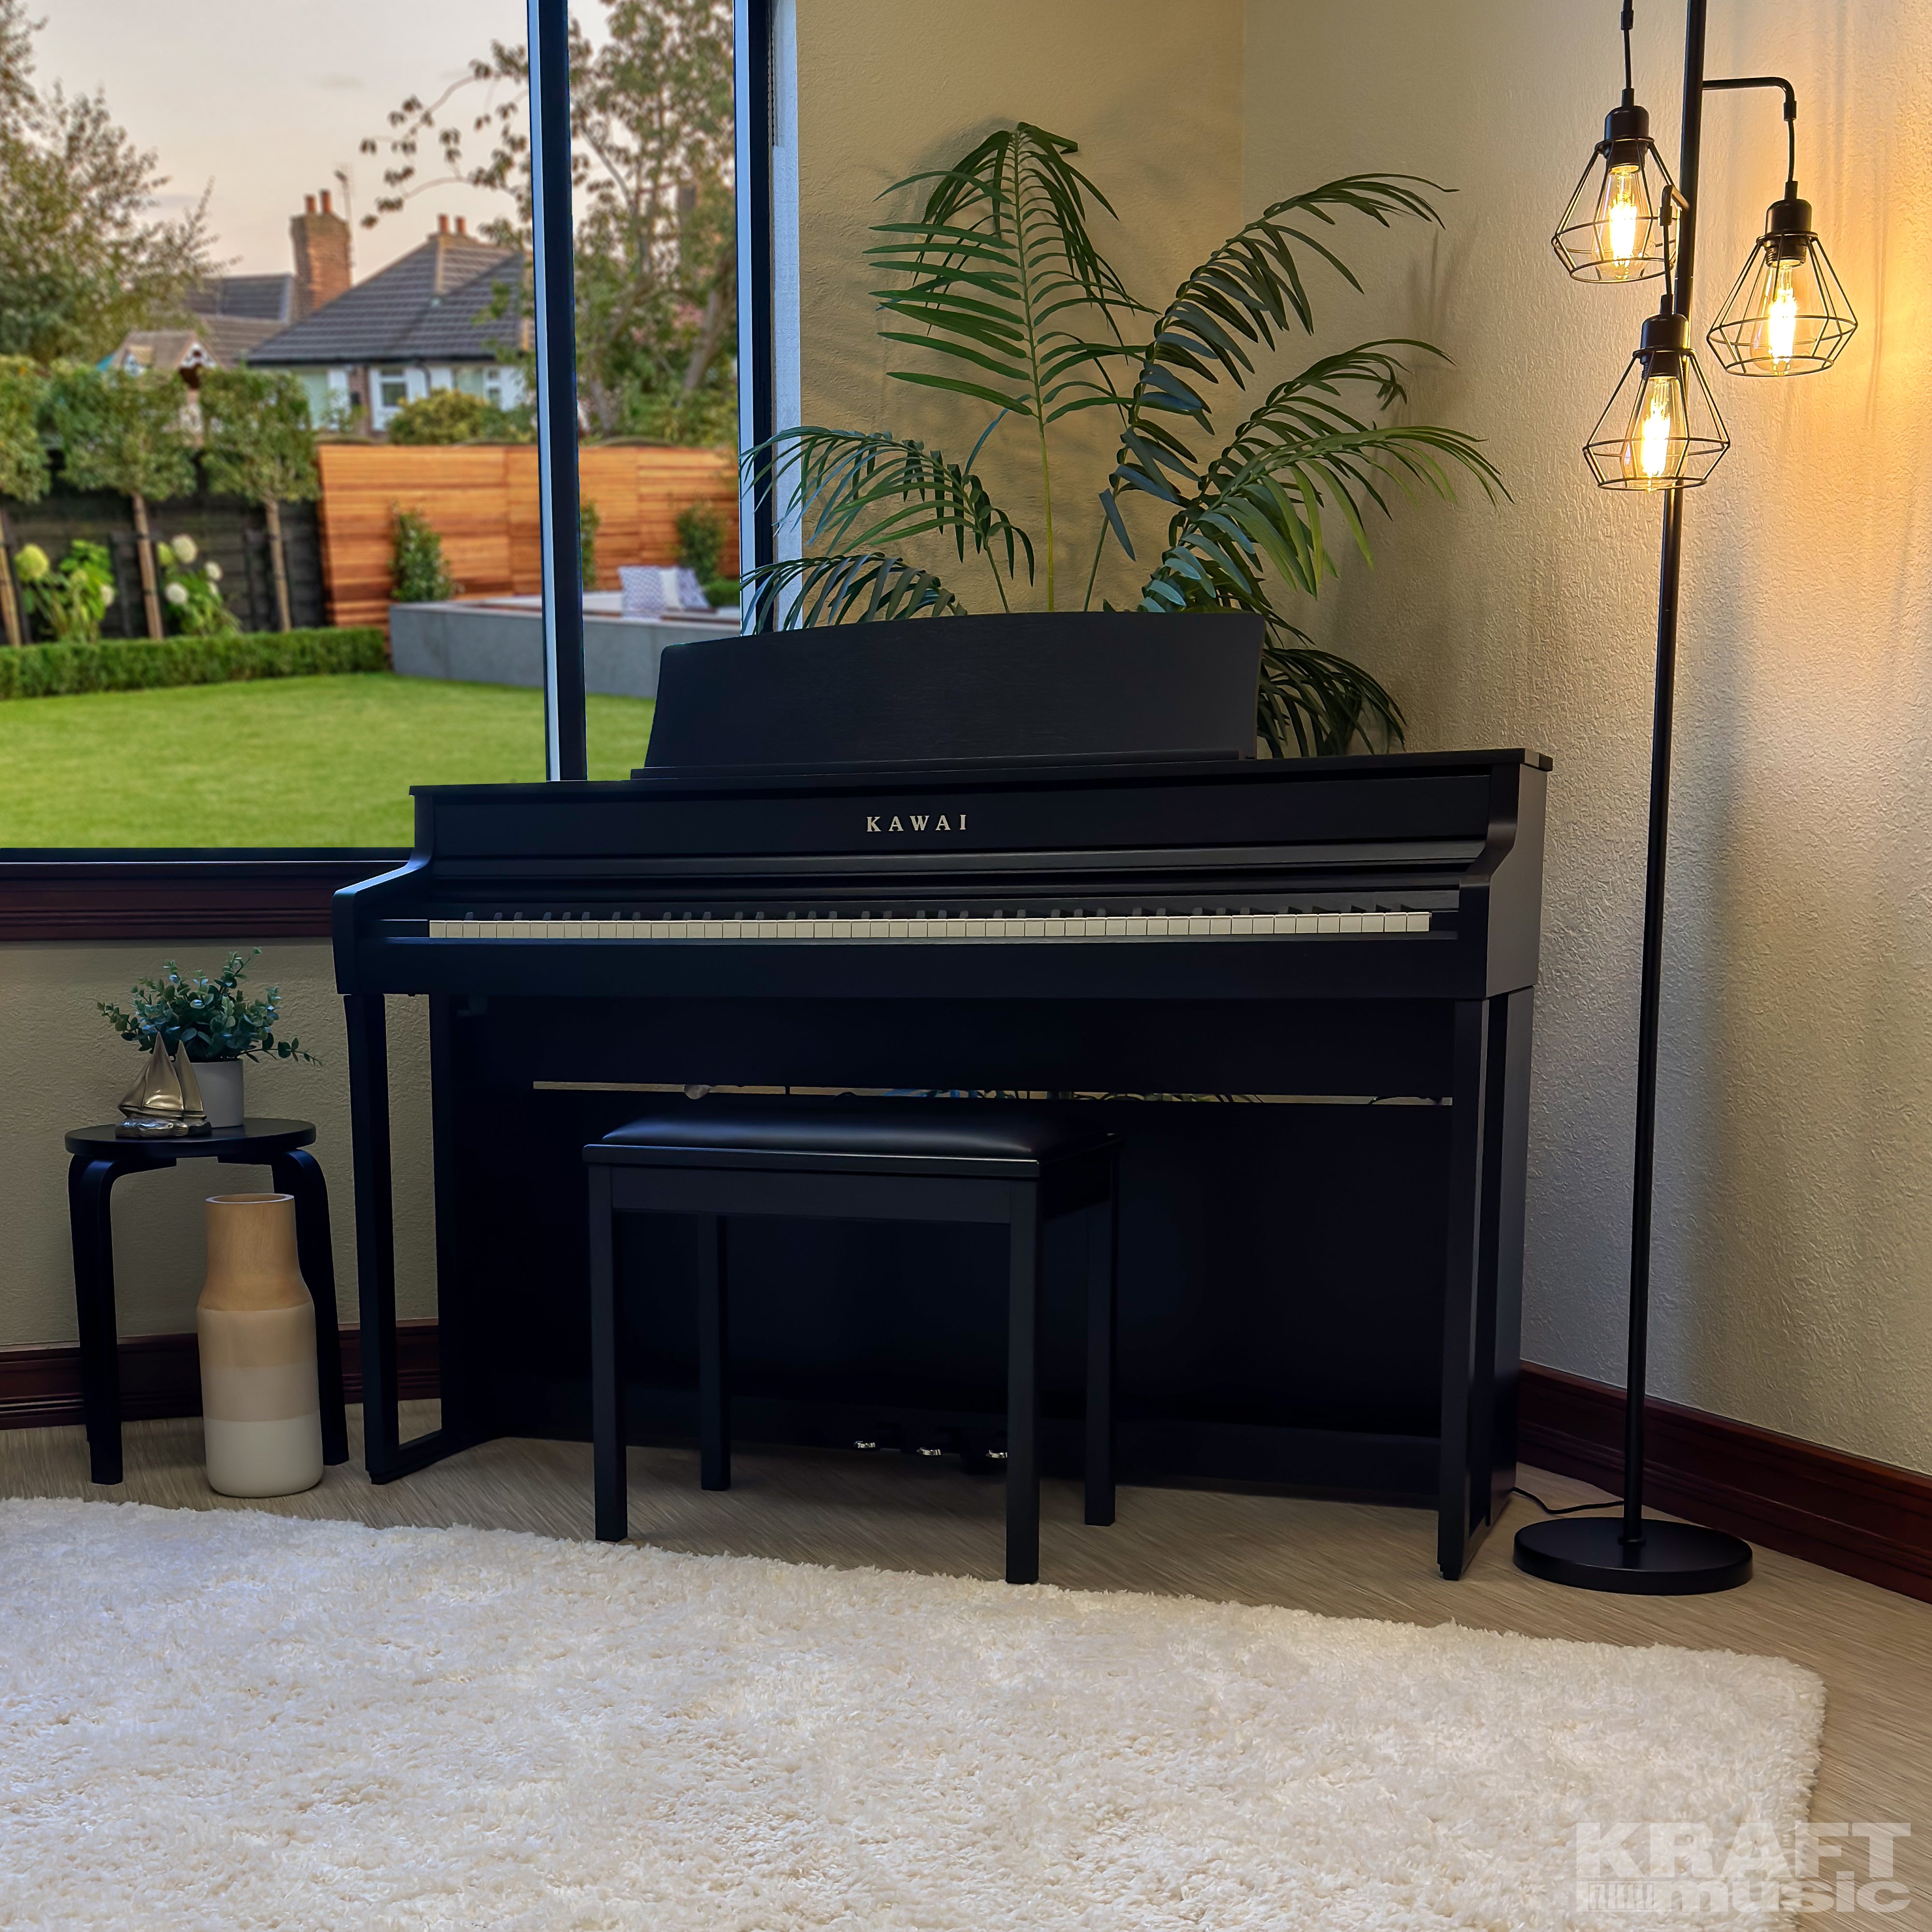 Kawai CA501 Concert Artist Digital Piano - Satin Black - in a stylish living room facing left